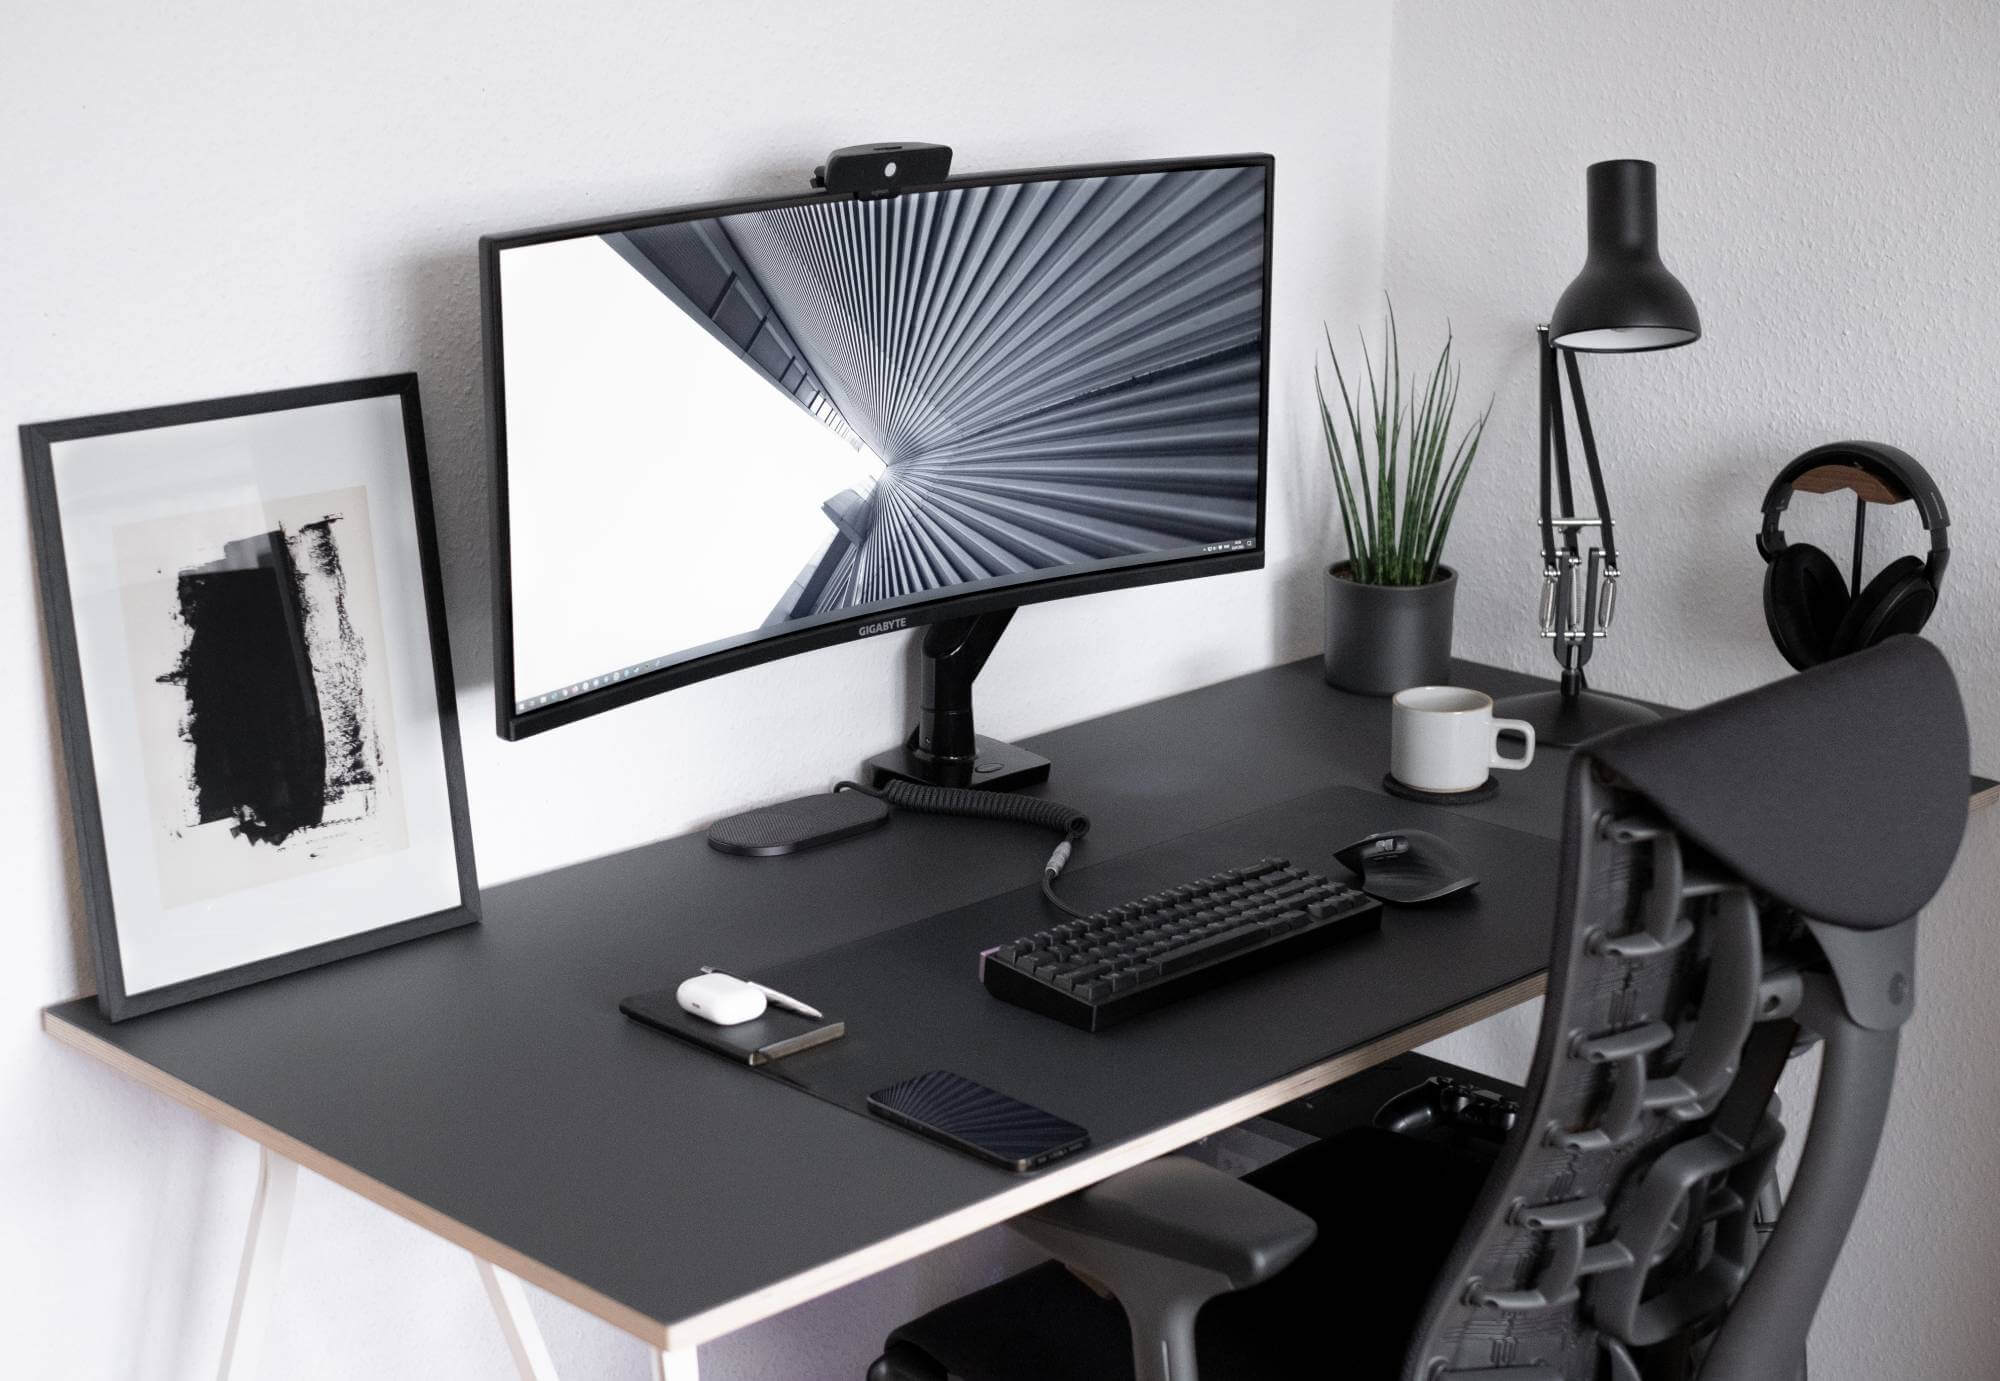 A minimal monochrome desk setup